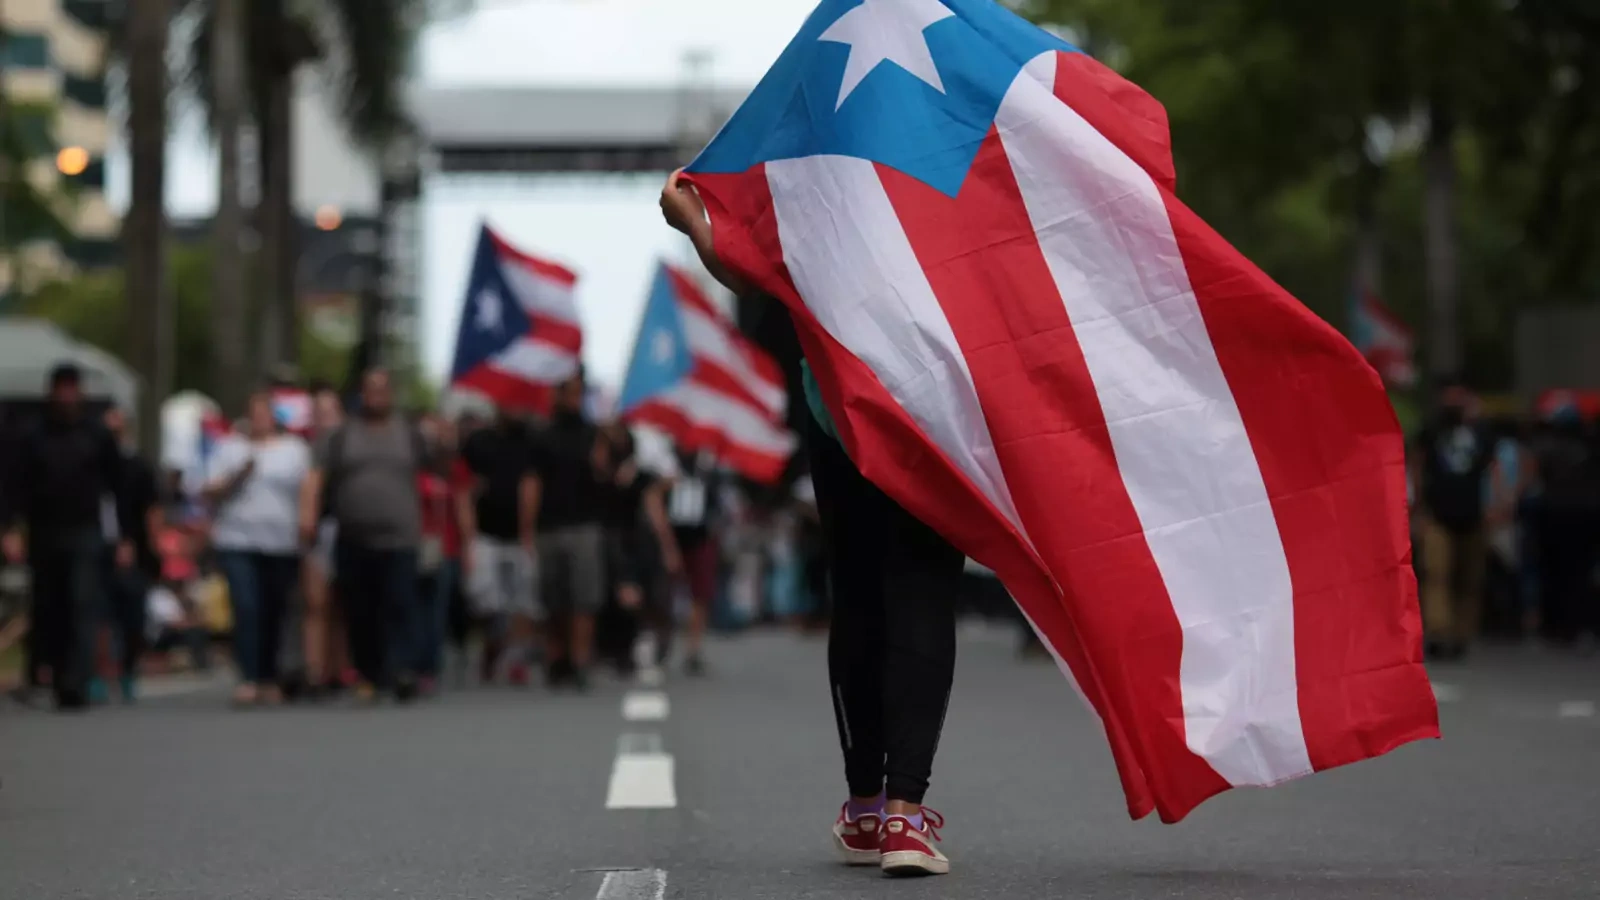 Run Like a Diva Puerto Rico: Empowering Women Through Fitness